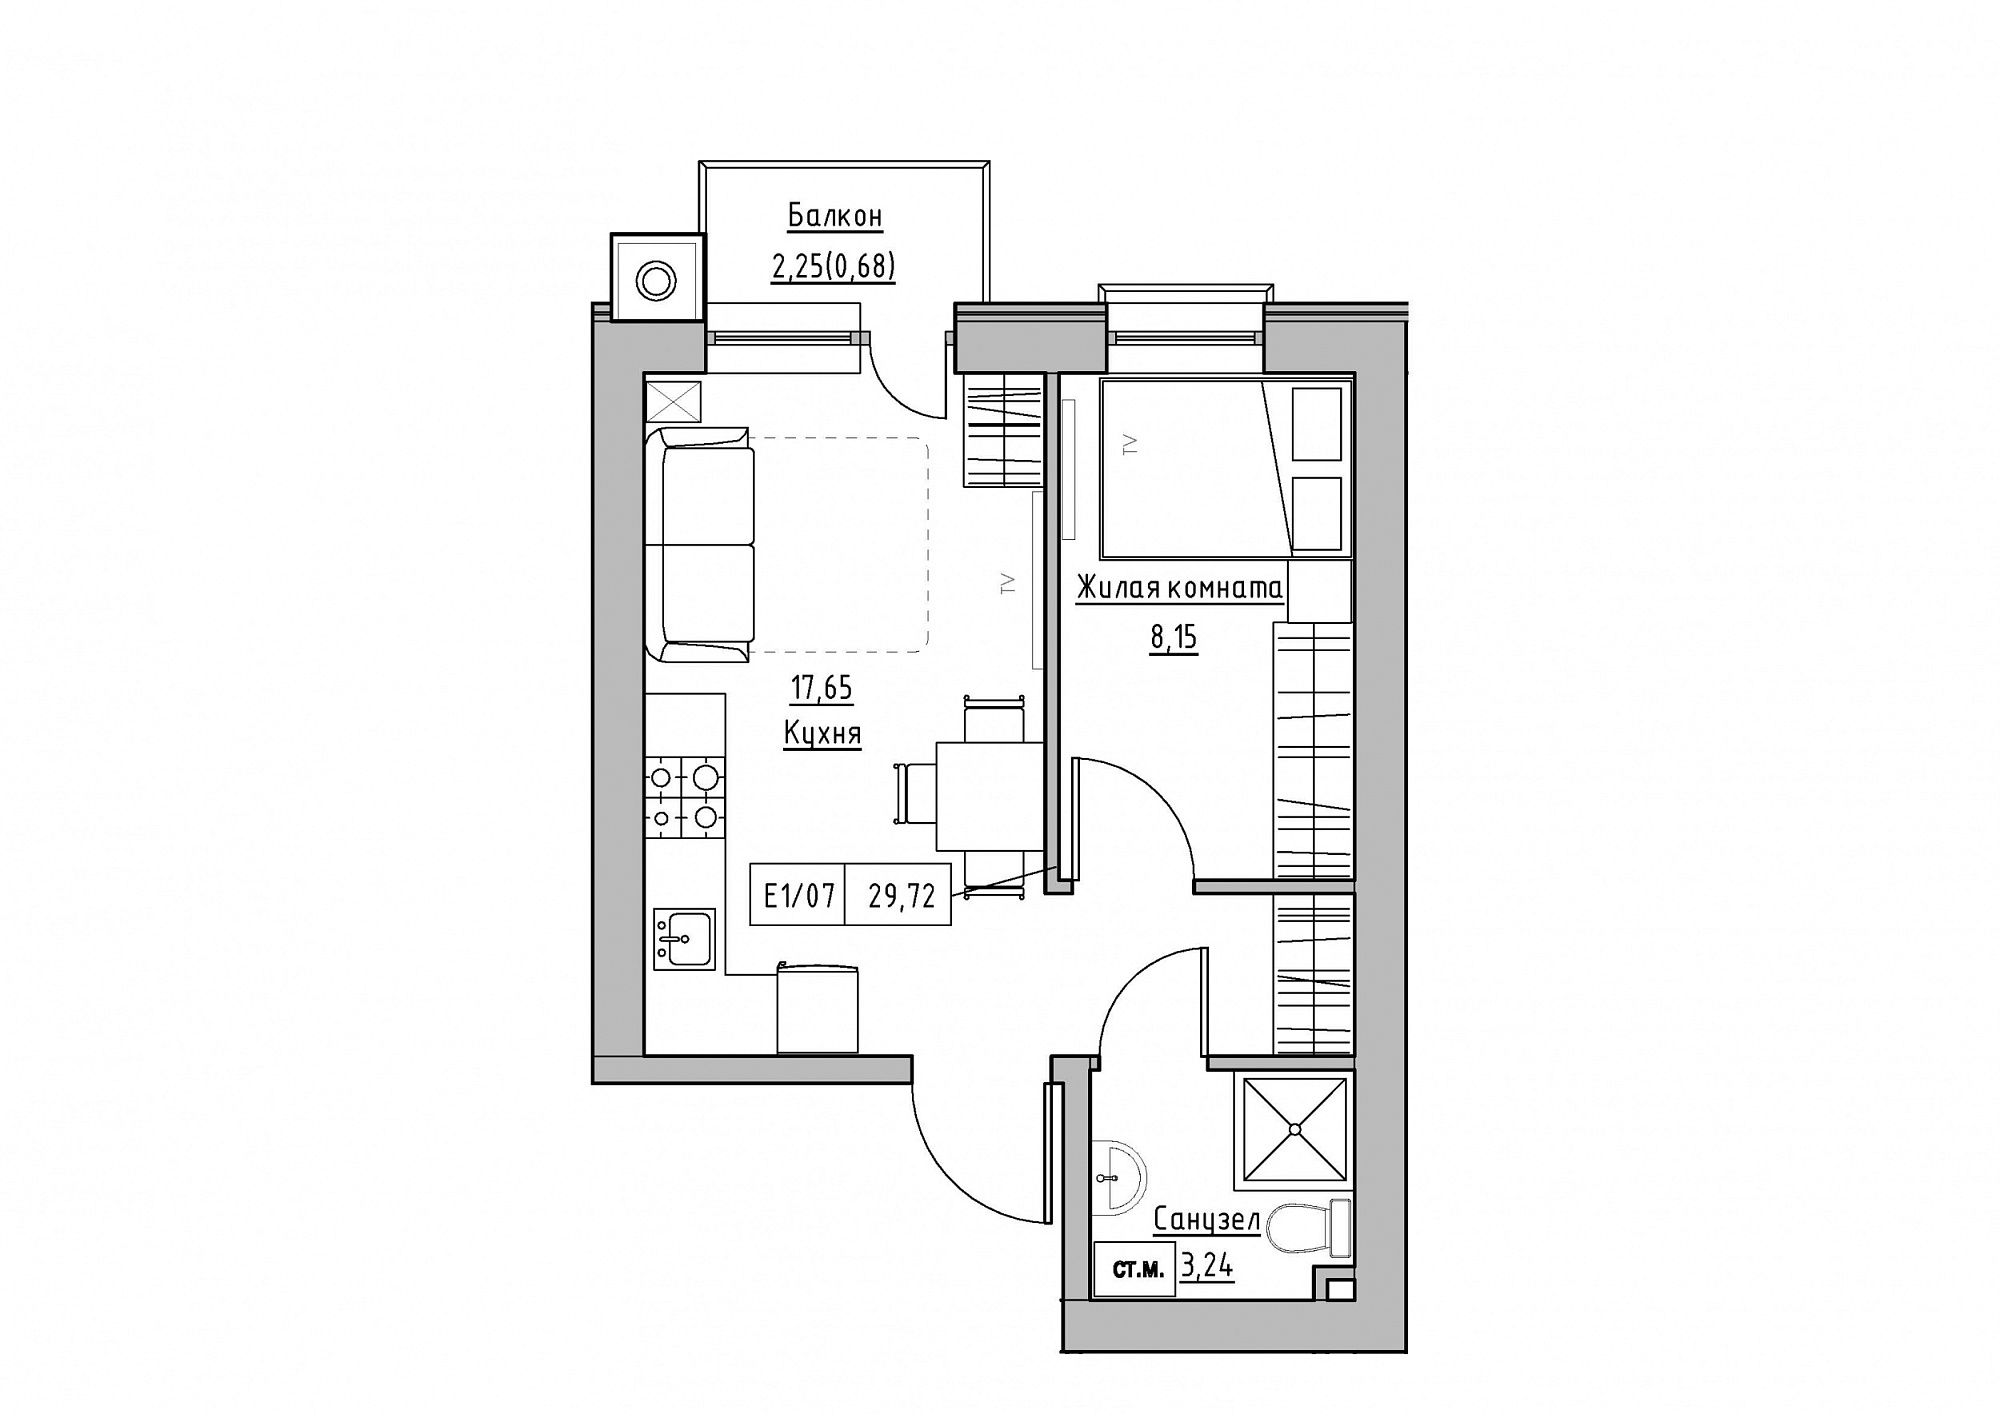 Planning 1-rm flats area 29.72m2, KS-012-03/0003.